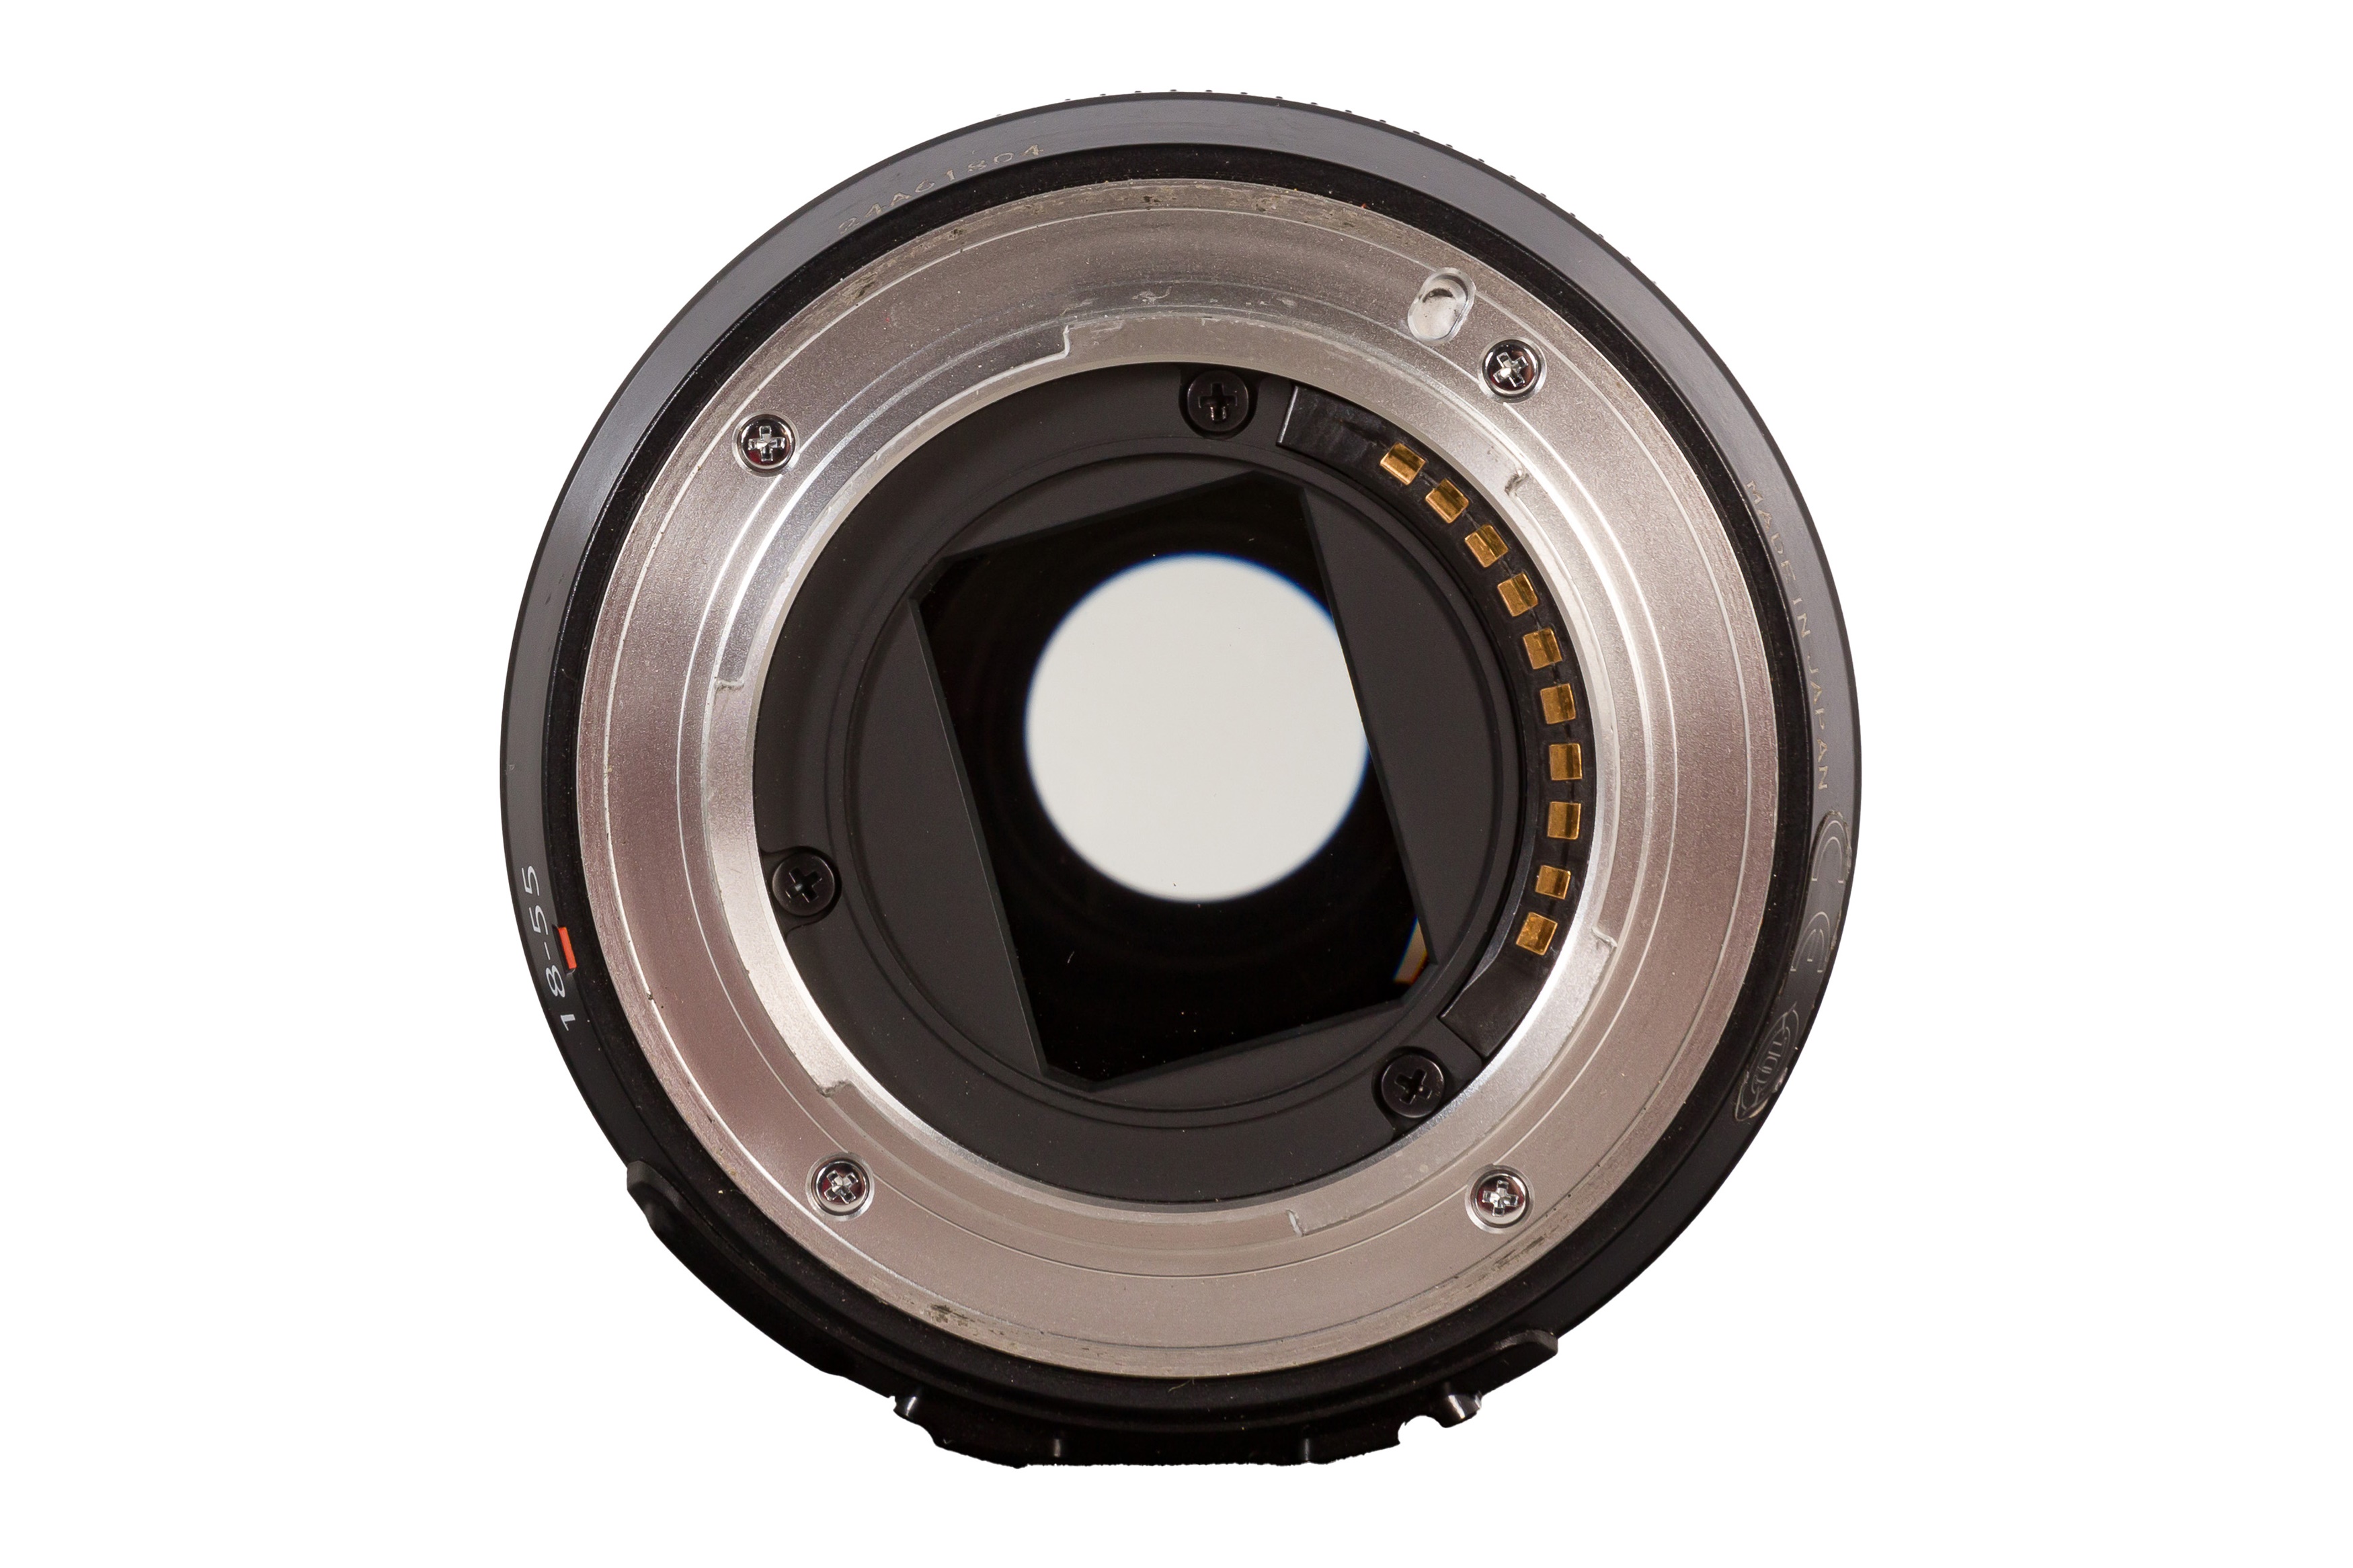 A Fuji X-Pro 1 Digital Mirrorless Rangefinder Camera with Various Lens Adapters - Image 7 of 7